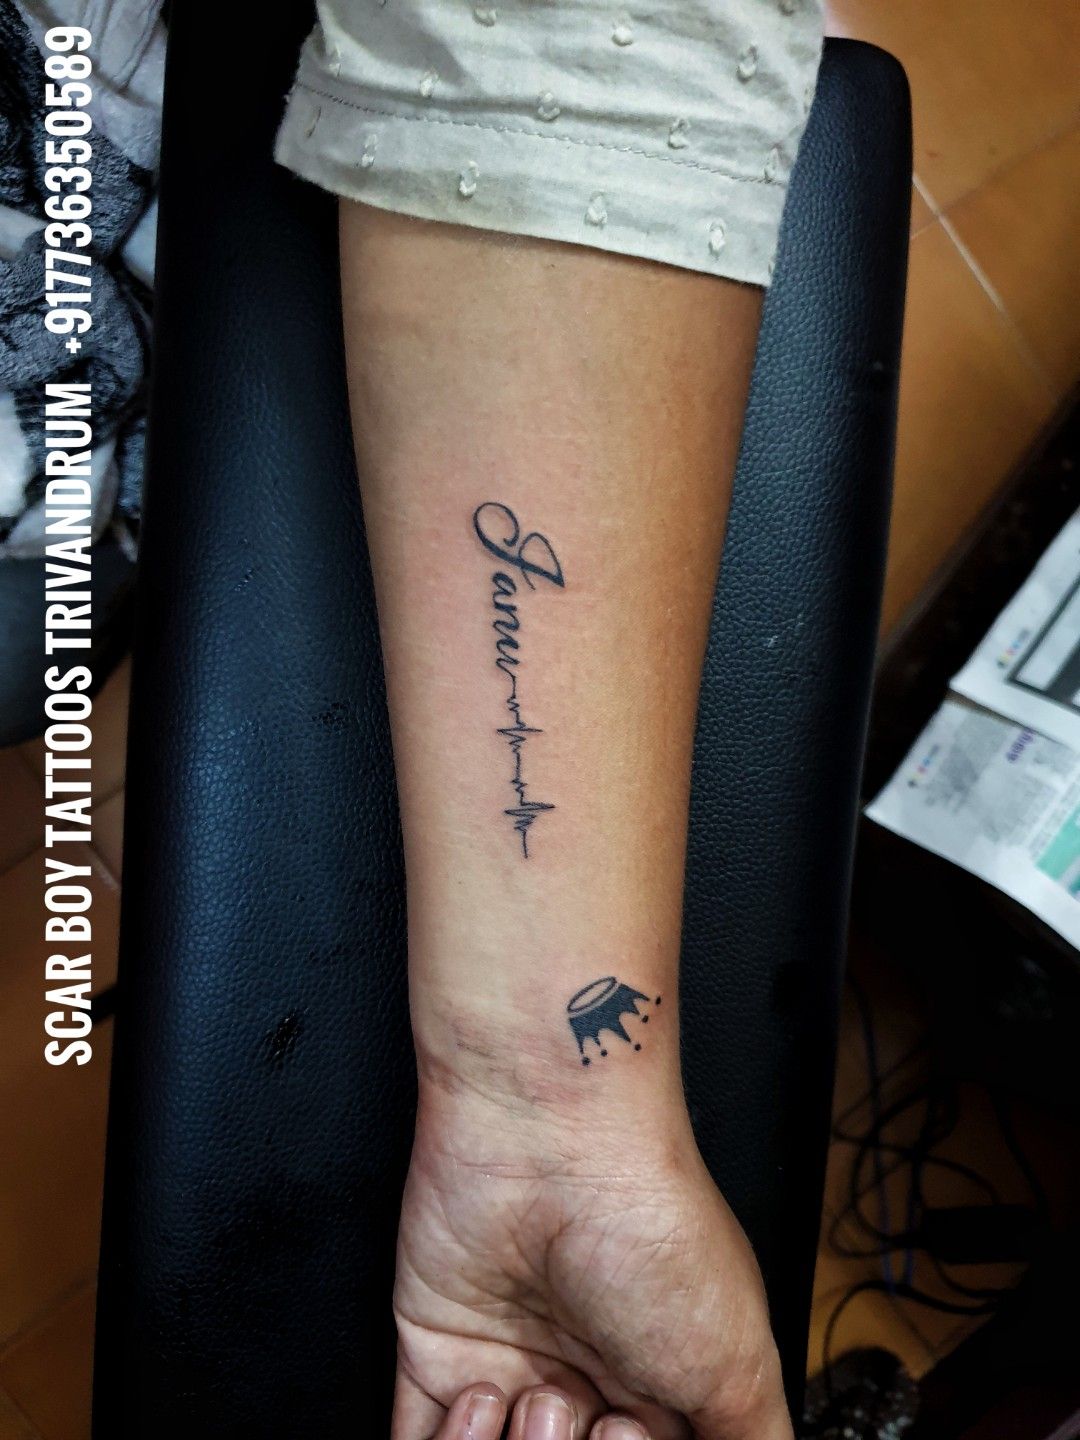 InkMan Tattoo Studio på Twitter Ambigram Design  Trupti amp Nitin  tattoo tattoos thane Mumbai MUFC Federer Name India Sunday  SundayFunday SundayMorning Class httpstco8QmFB66nle  Twitter